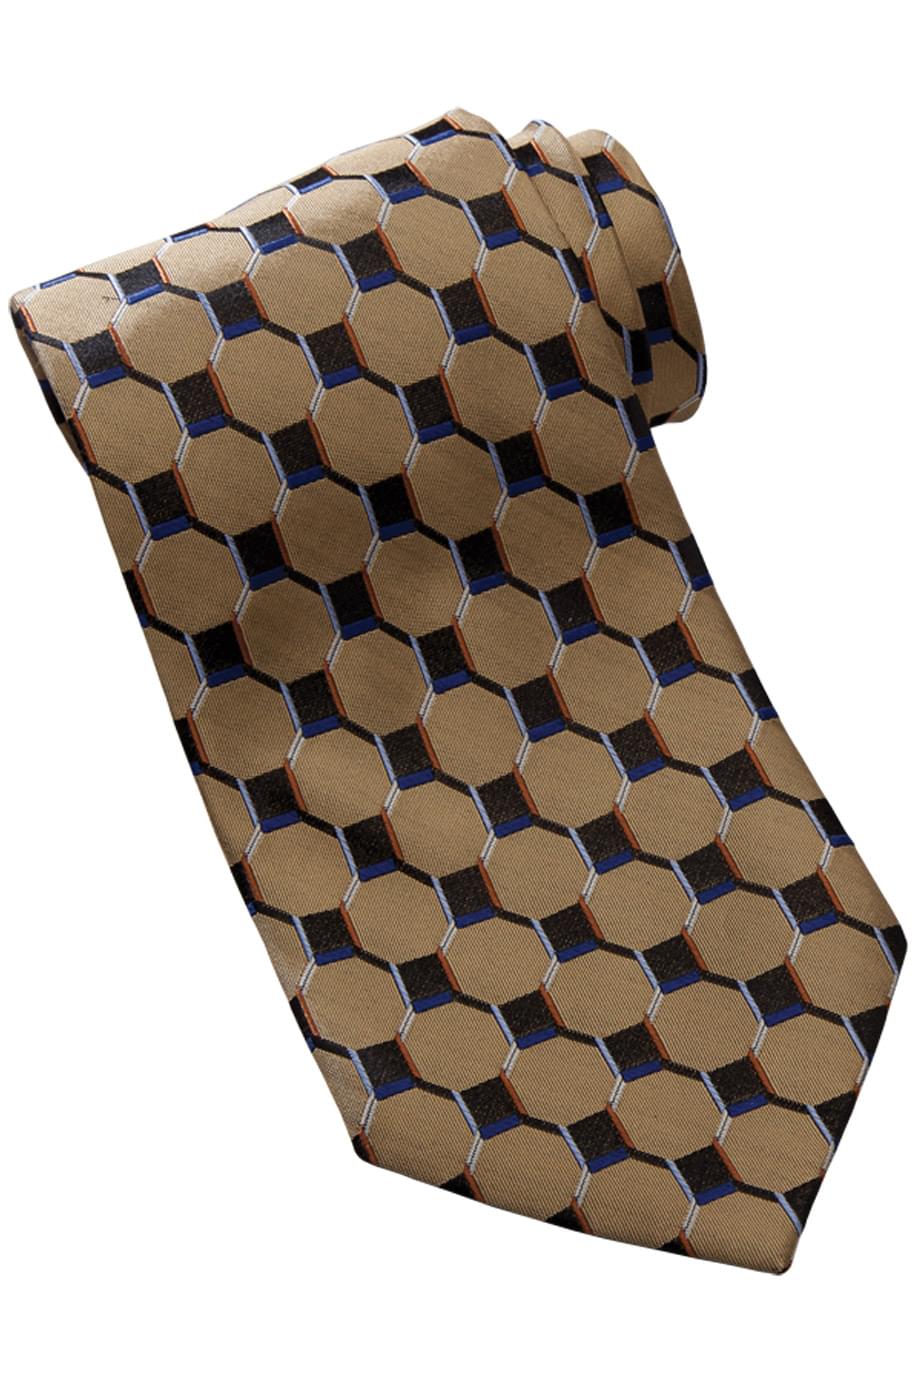 Uniforms - Silk Tie, Honeycomb Pattern, Gold, Black